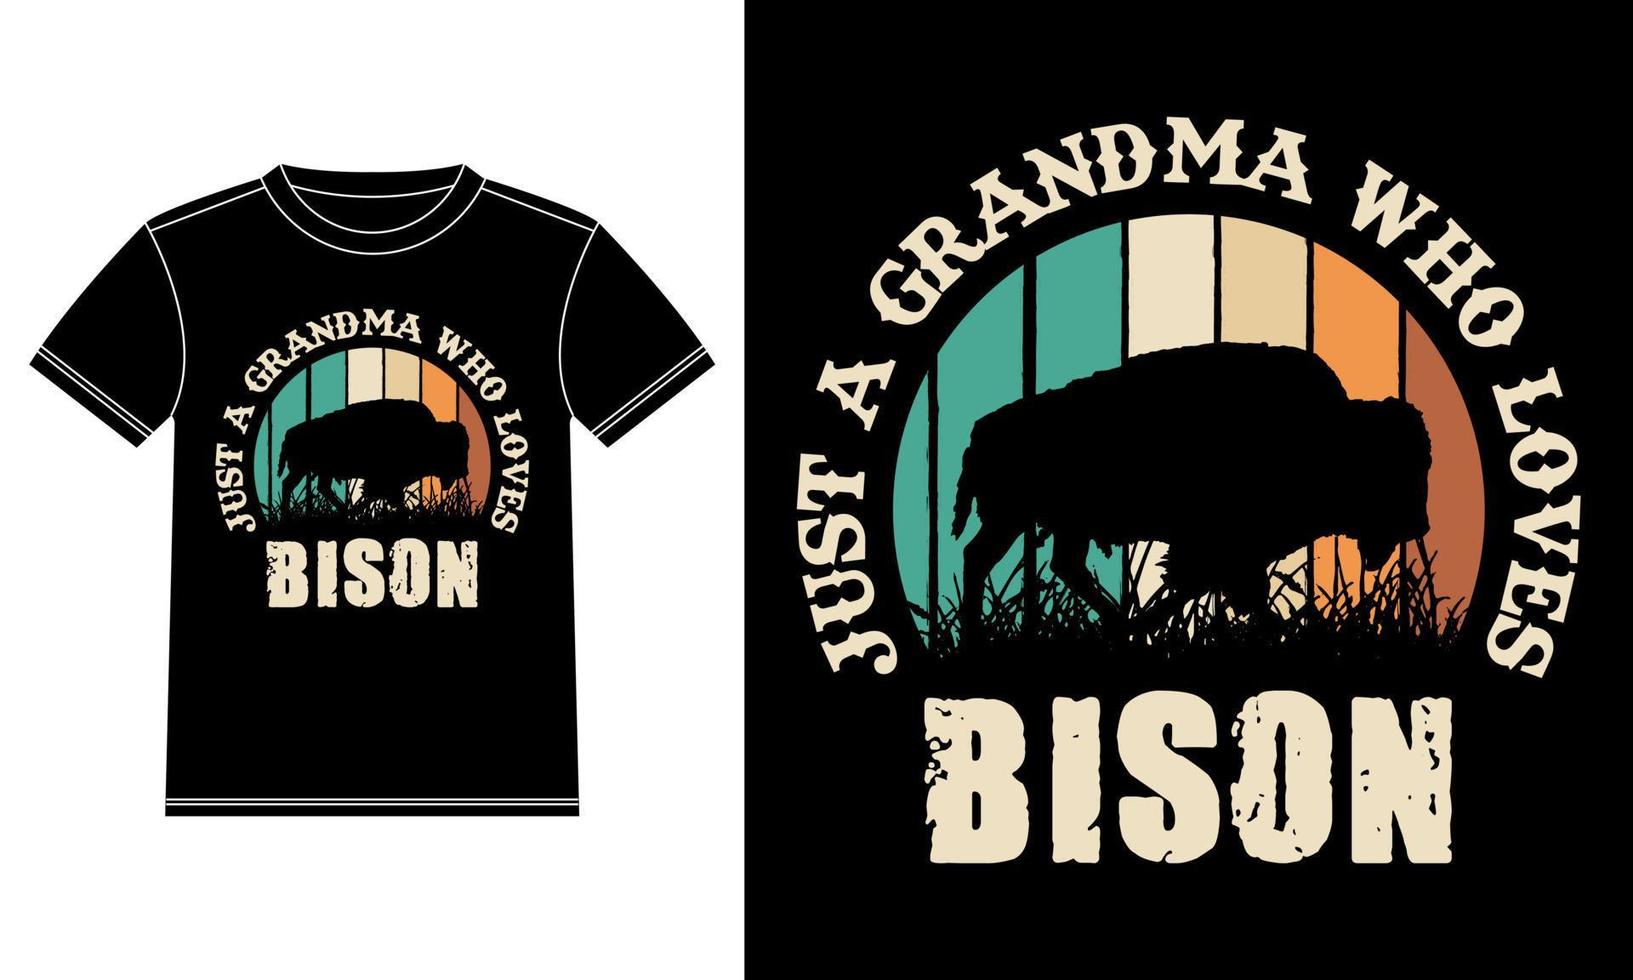 bara en mormor vem förälskelser bisoner årgång t-shirt design vektor